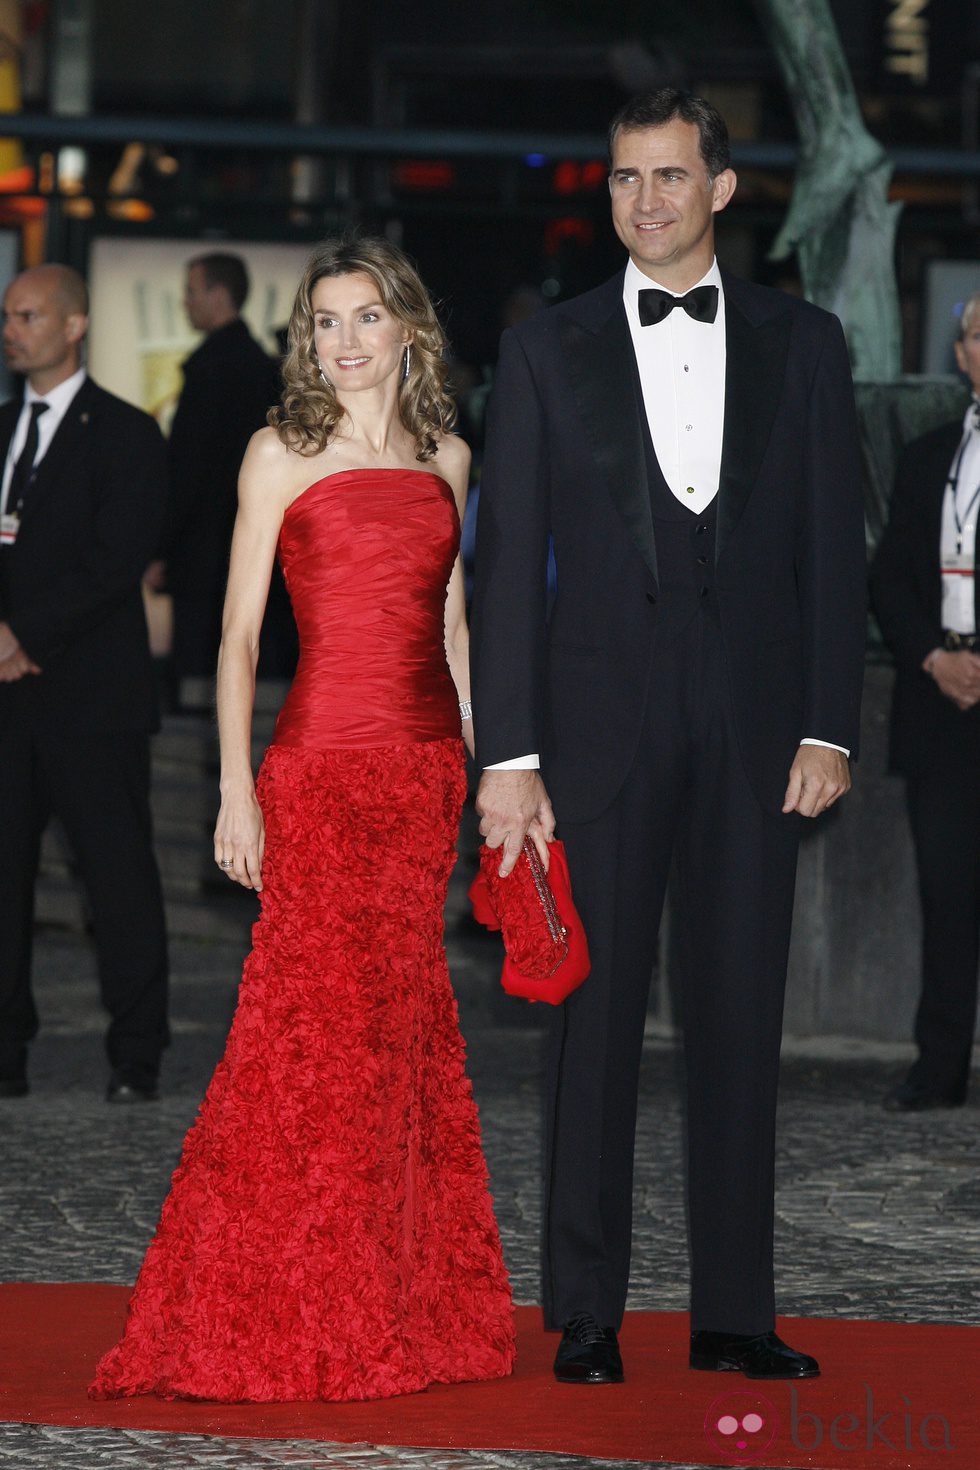 La Princesa Letizia con un vestido rojo de strapless junto al Príncipe Felipe